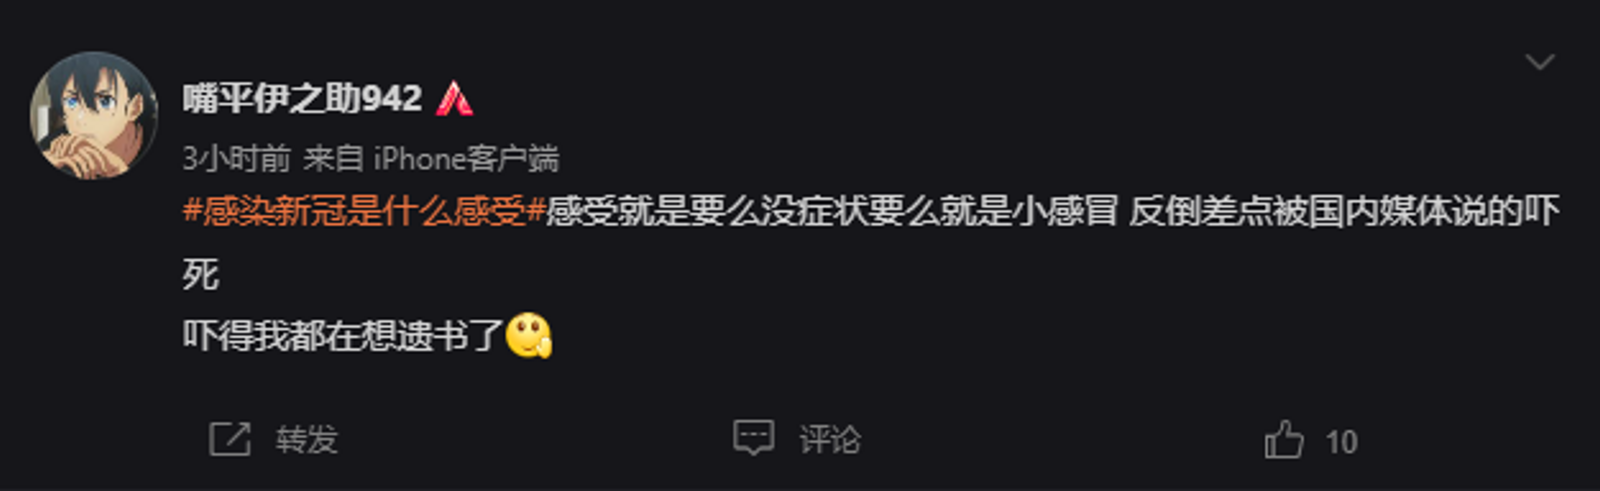 Weibo Post Media